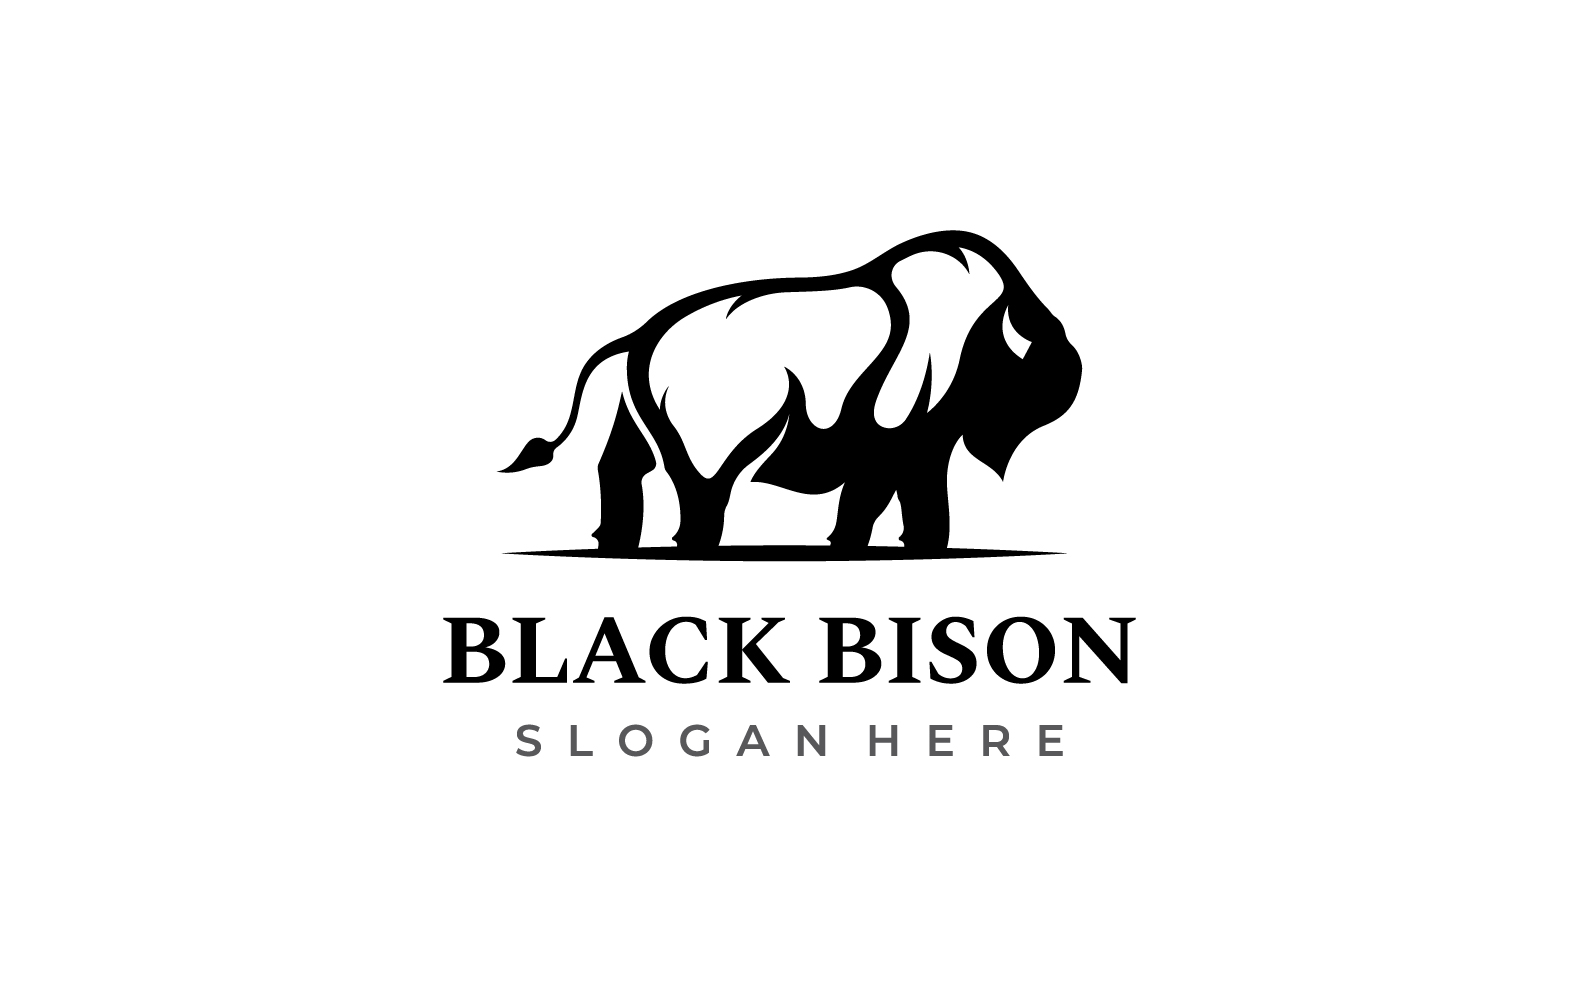 Black bison bull logo vector 2